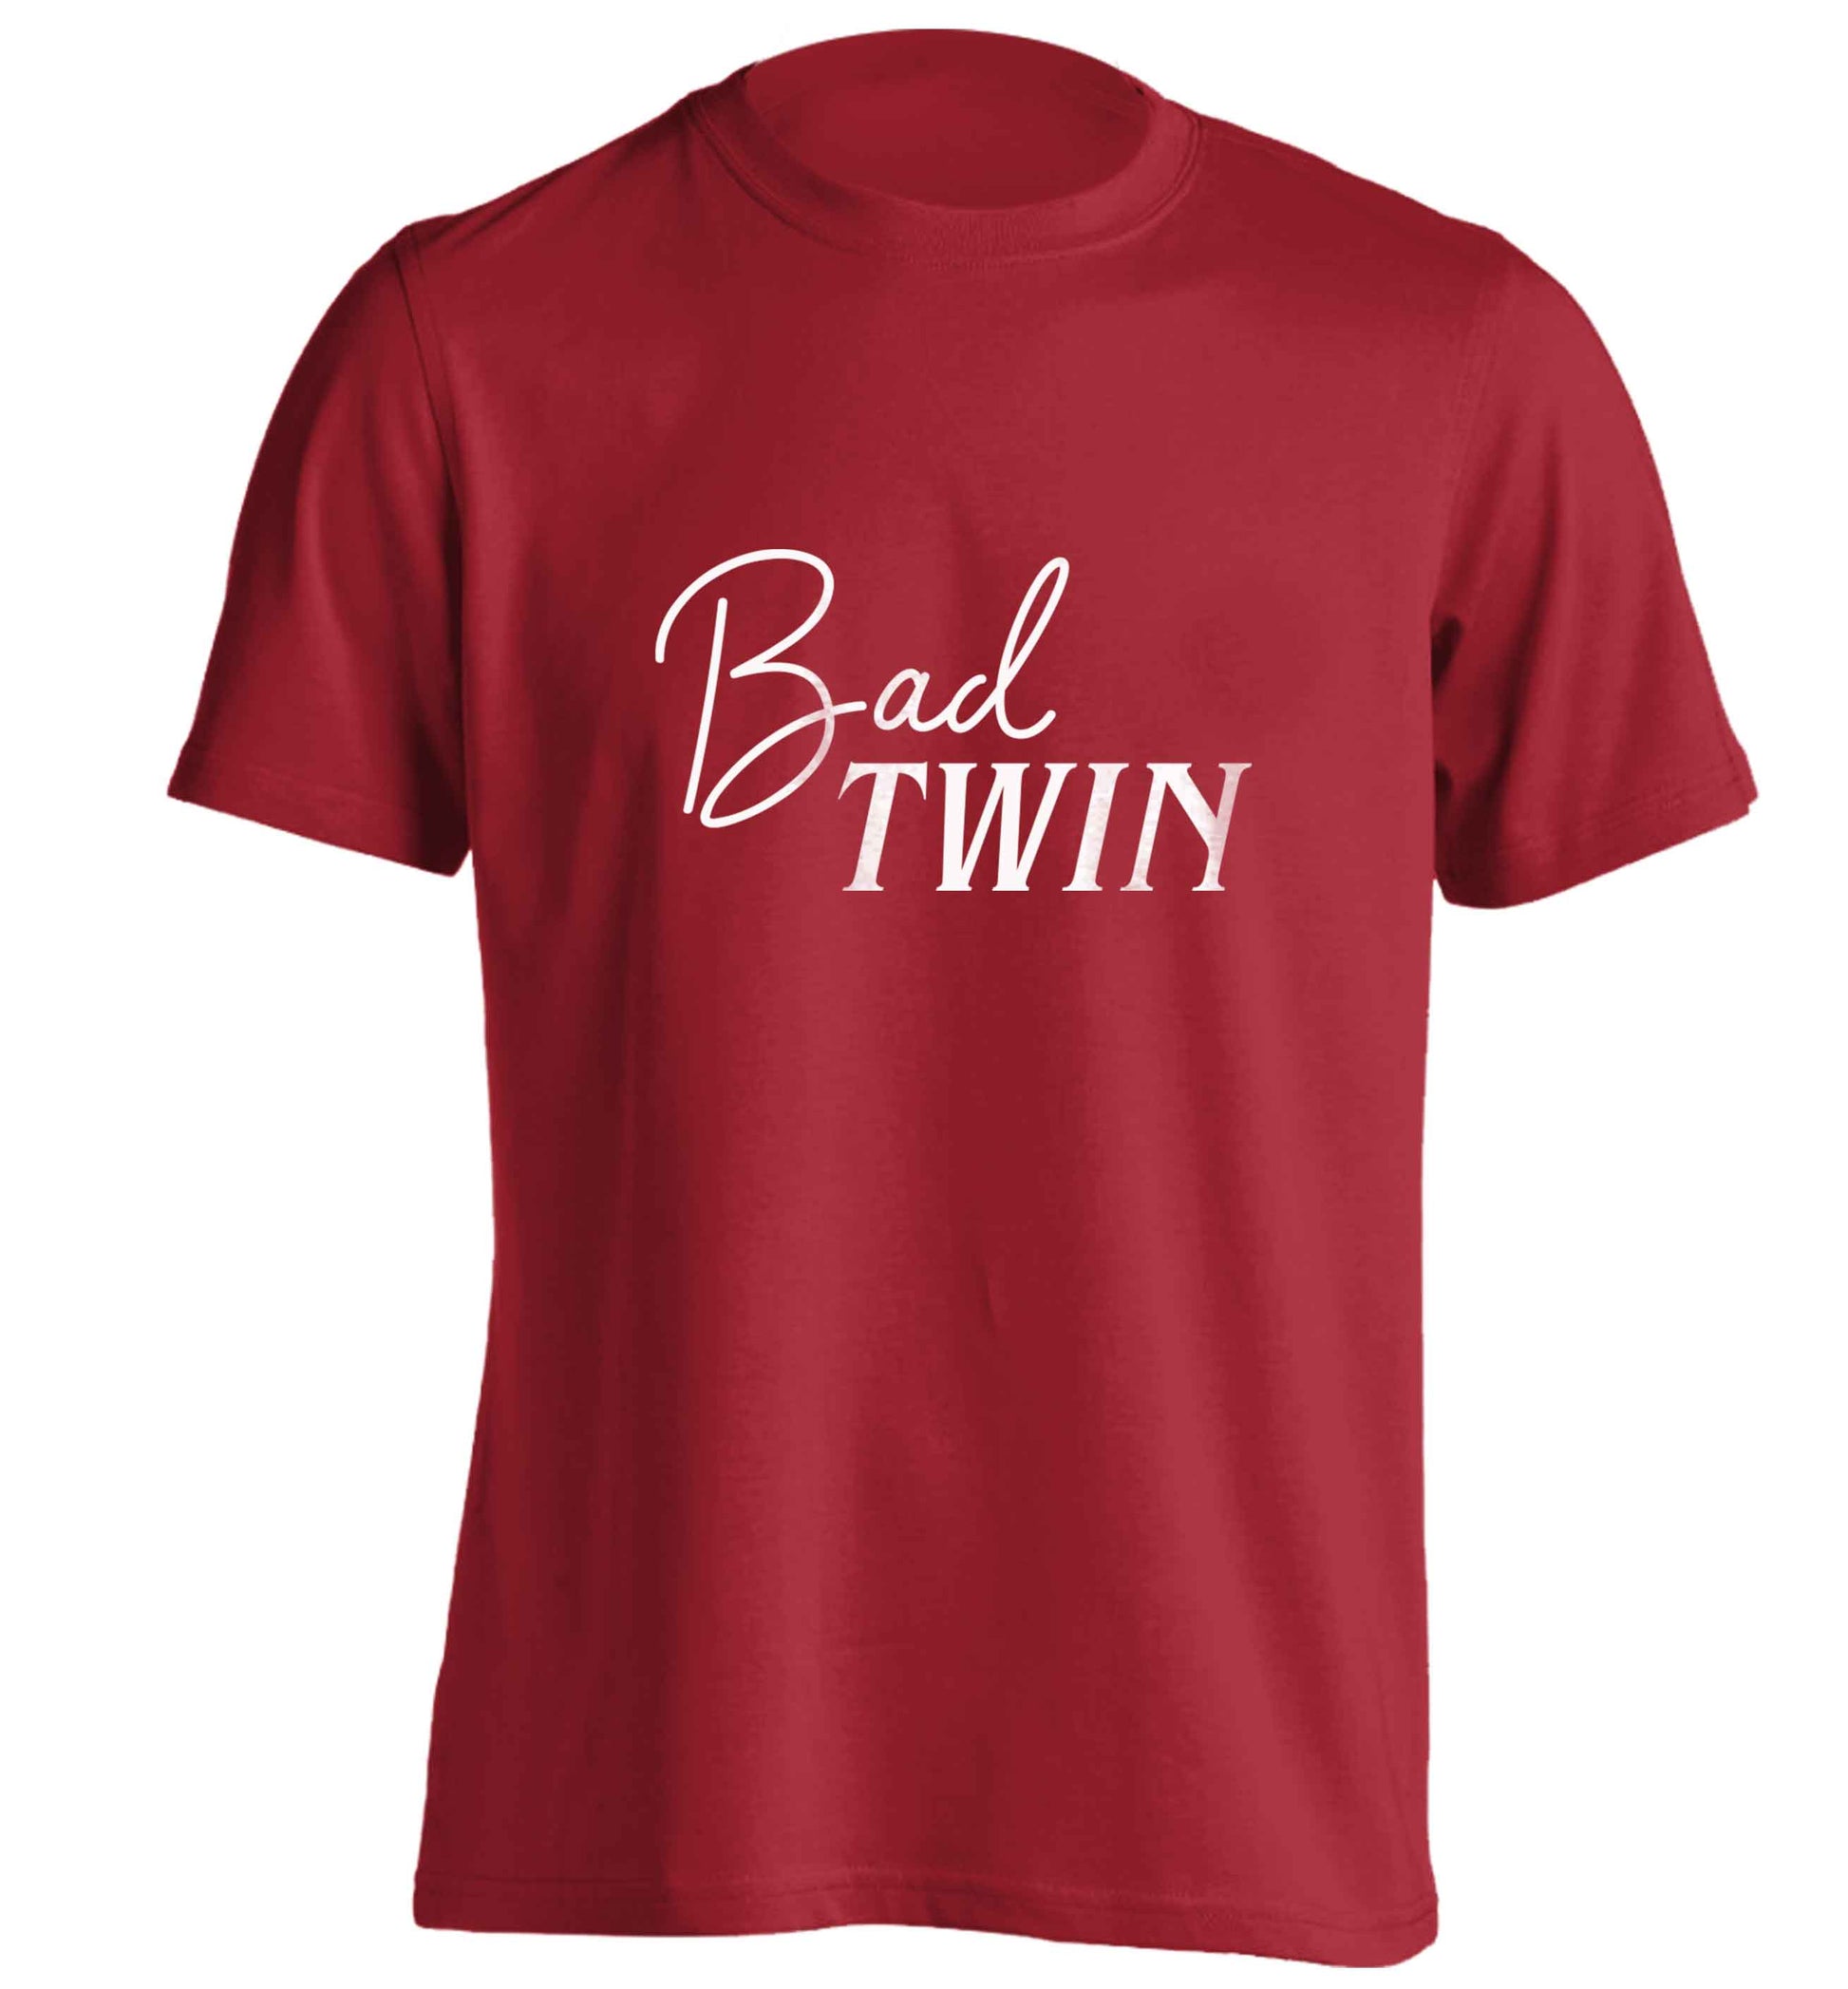 Bad twin adults unisex red Tshirt 2XL